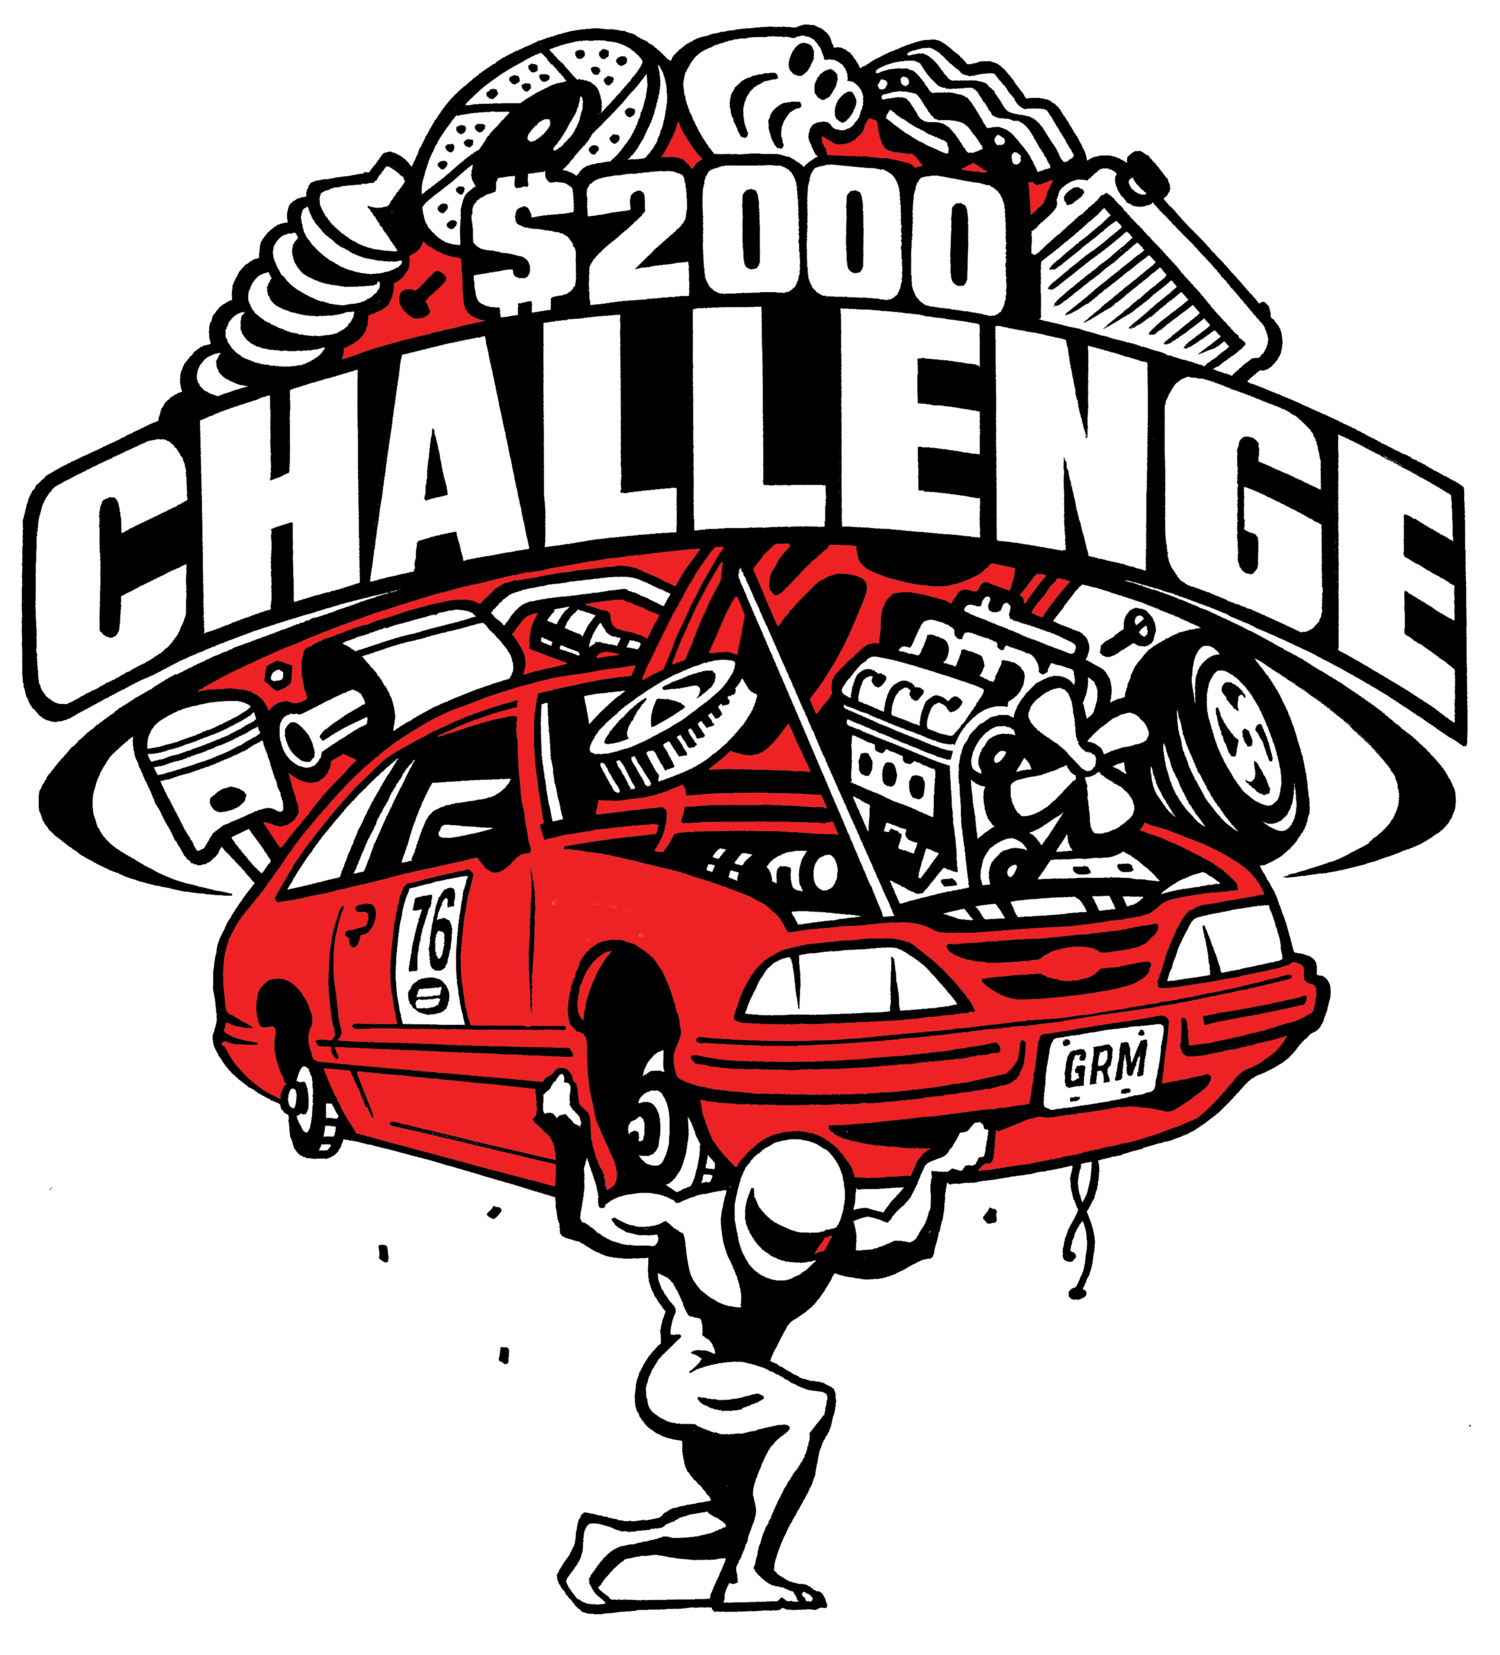 Grassroots Motorsports $2000 Challenge